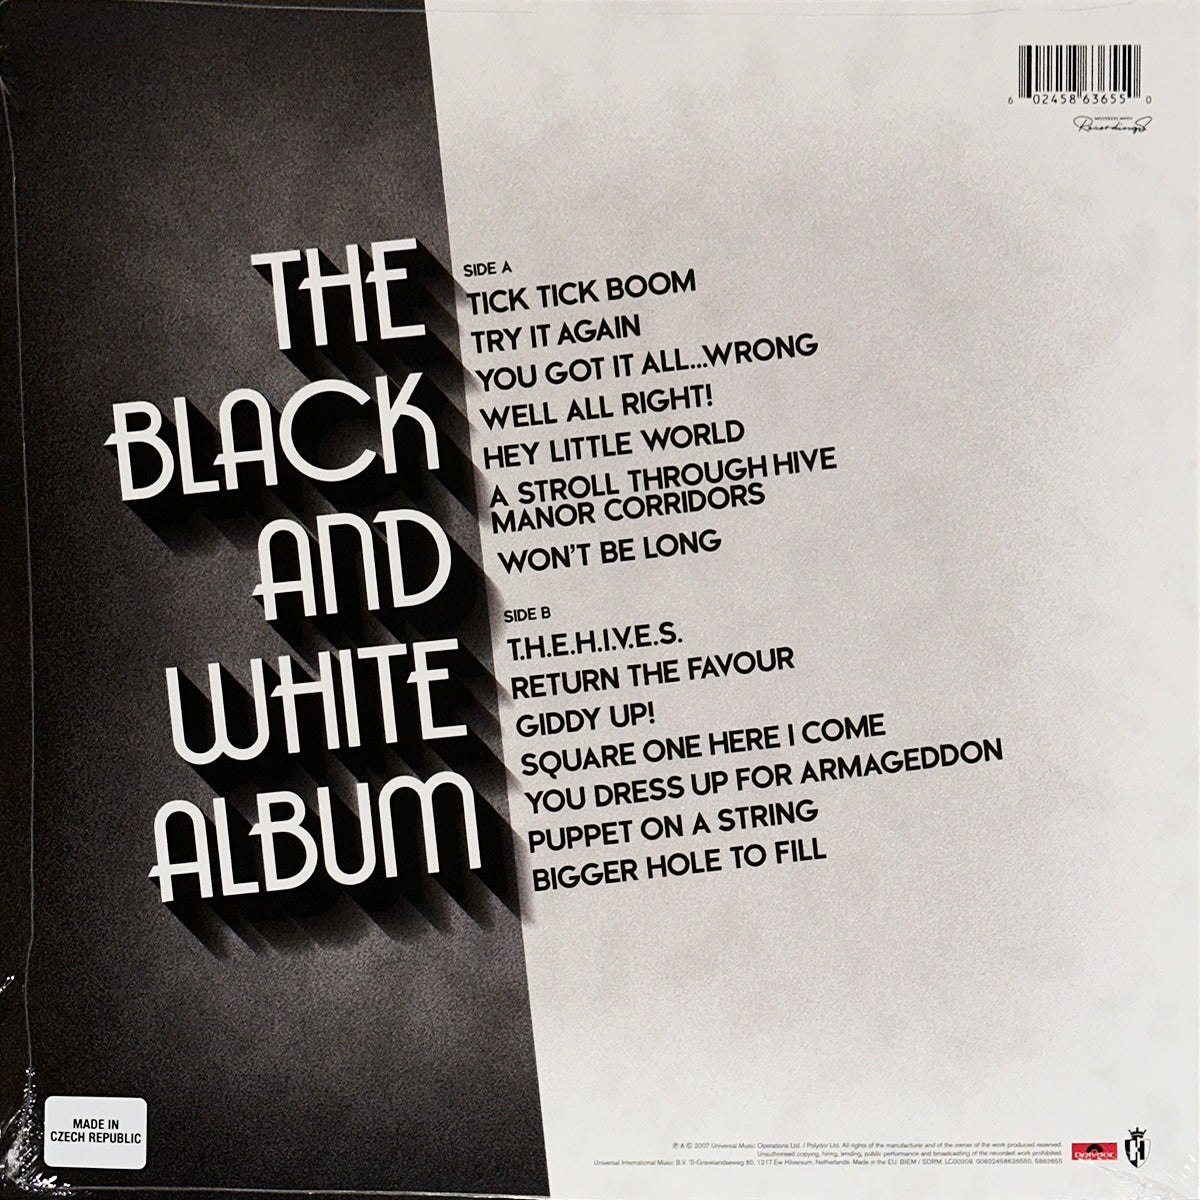 The Black And White Album